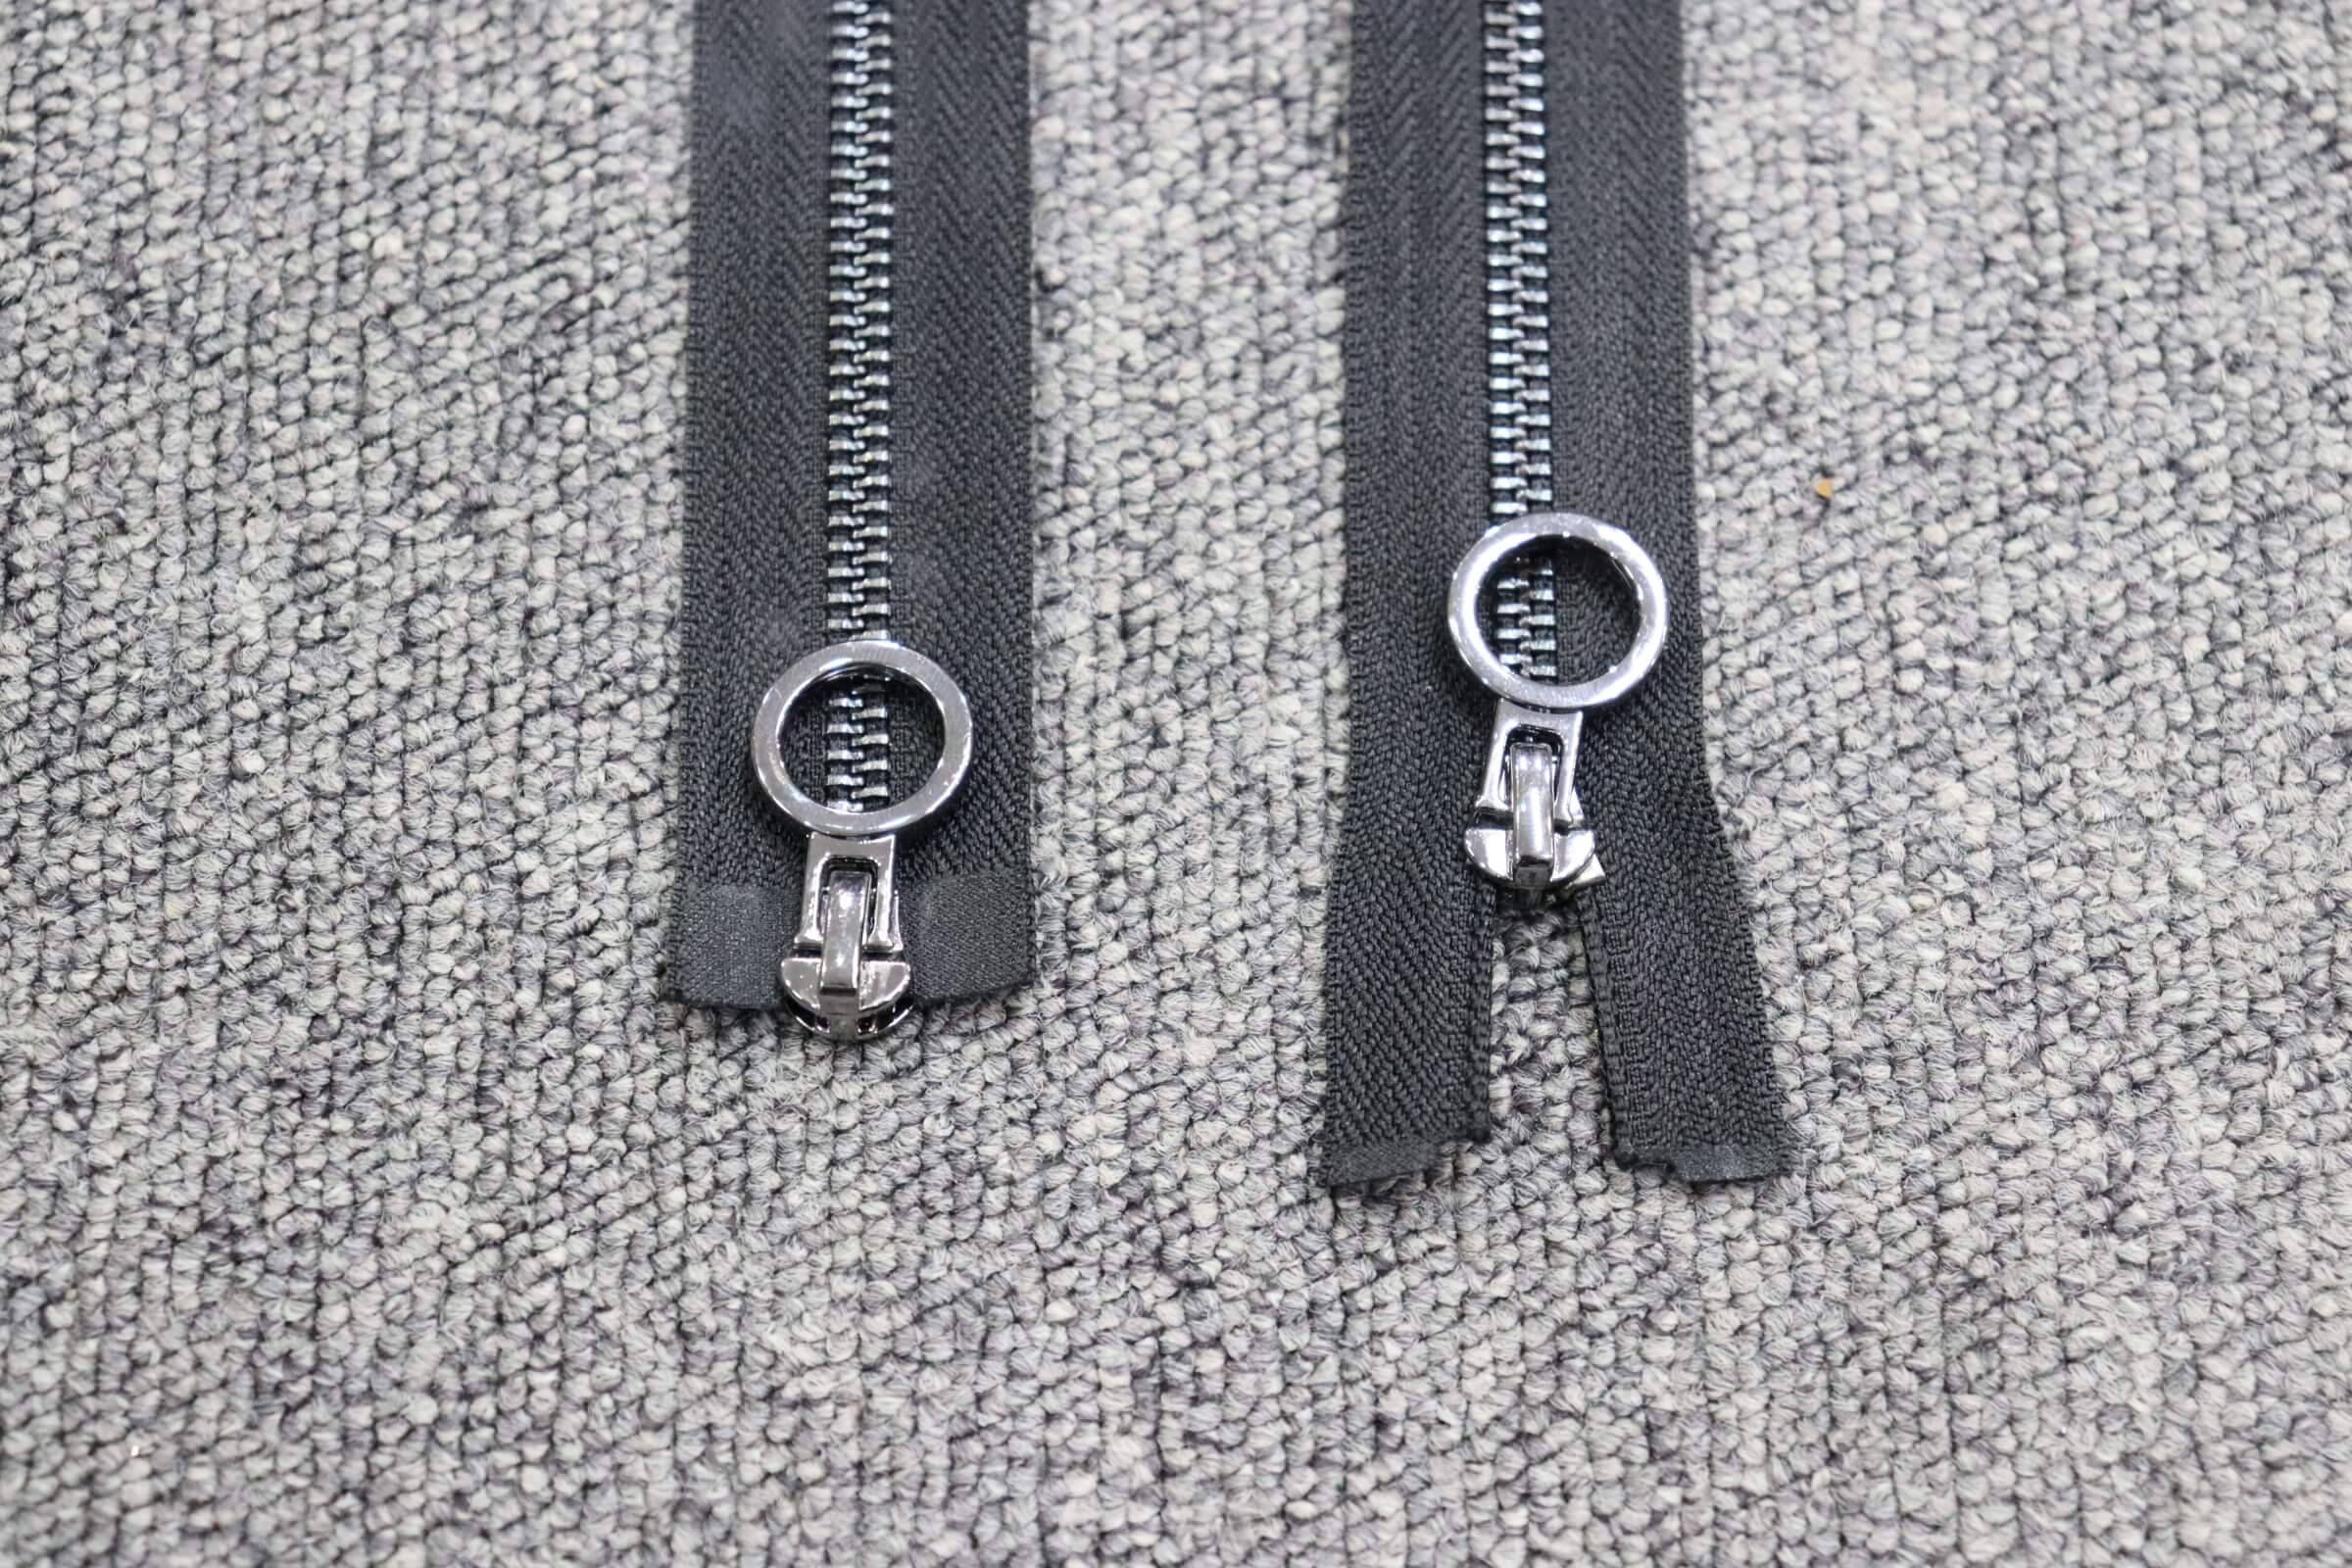 ZIPHOO #5 Metal Two-Way Separating Zipper